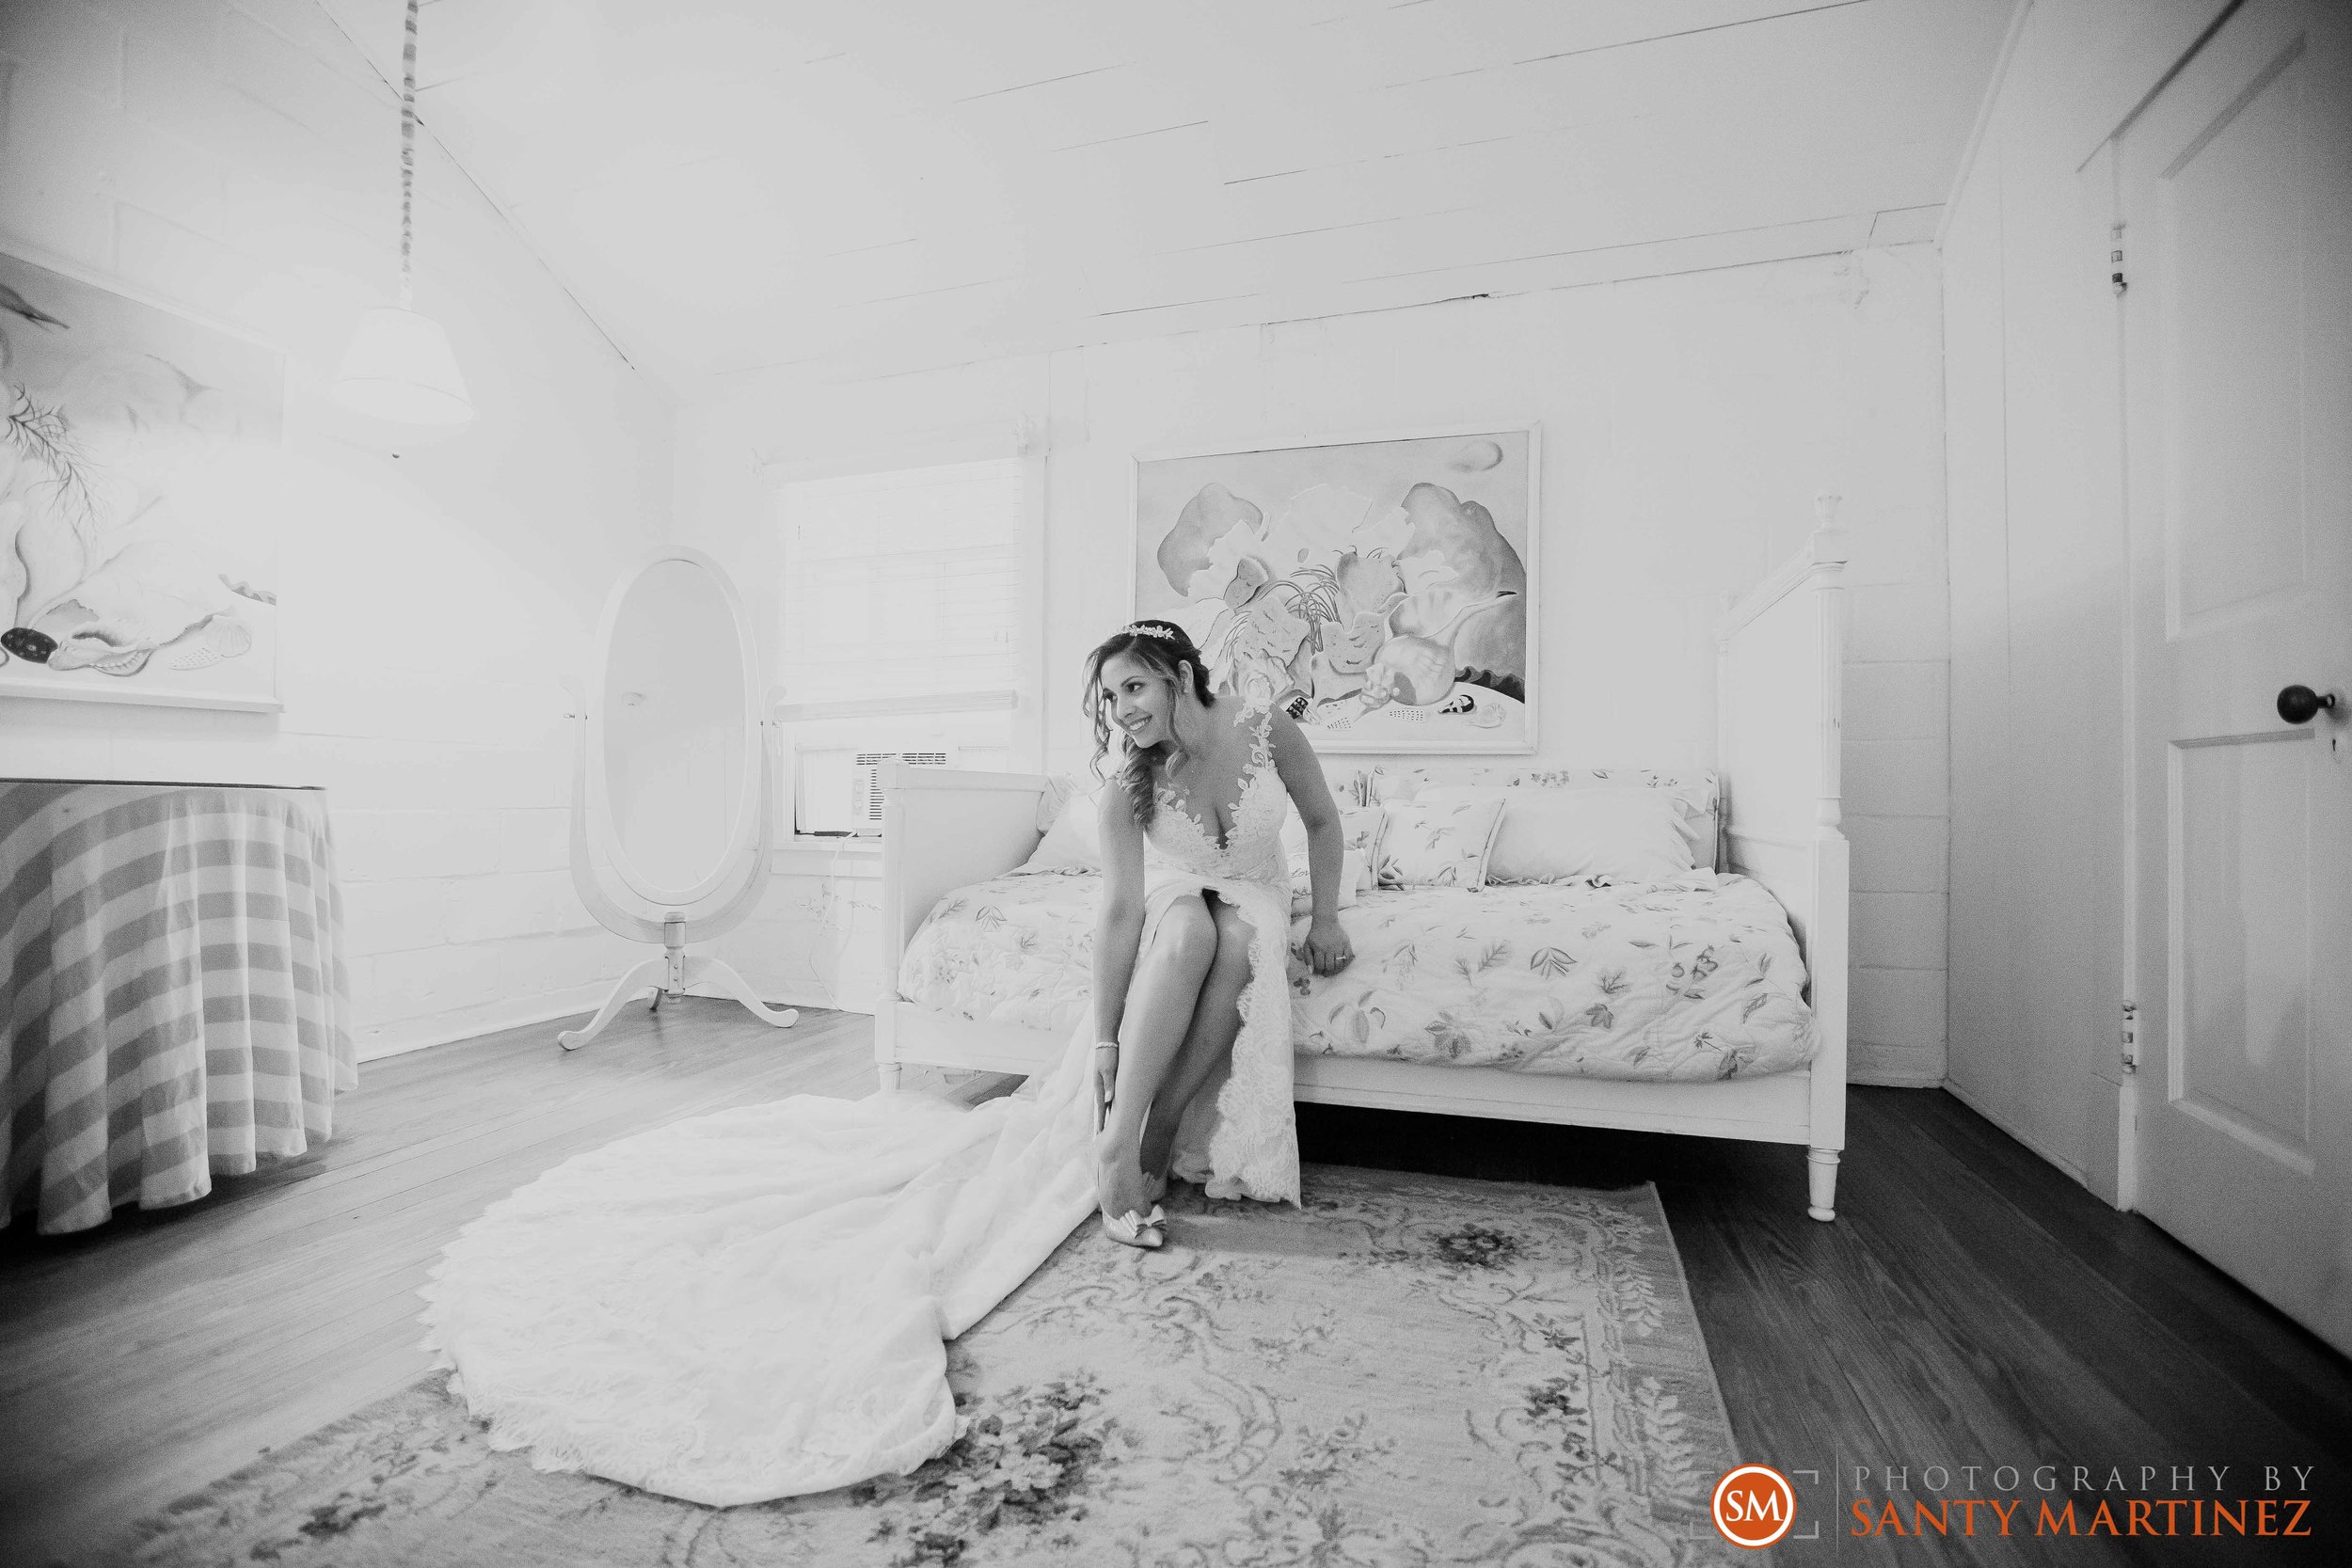 Wedding Bonnet House - Santy Martinez Photography-13.jpg